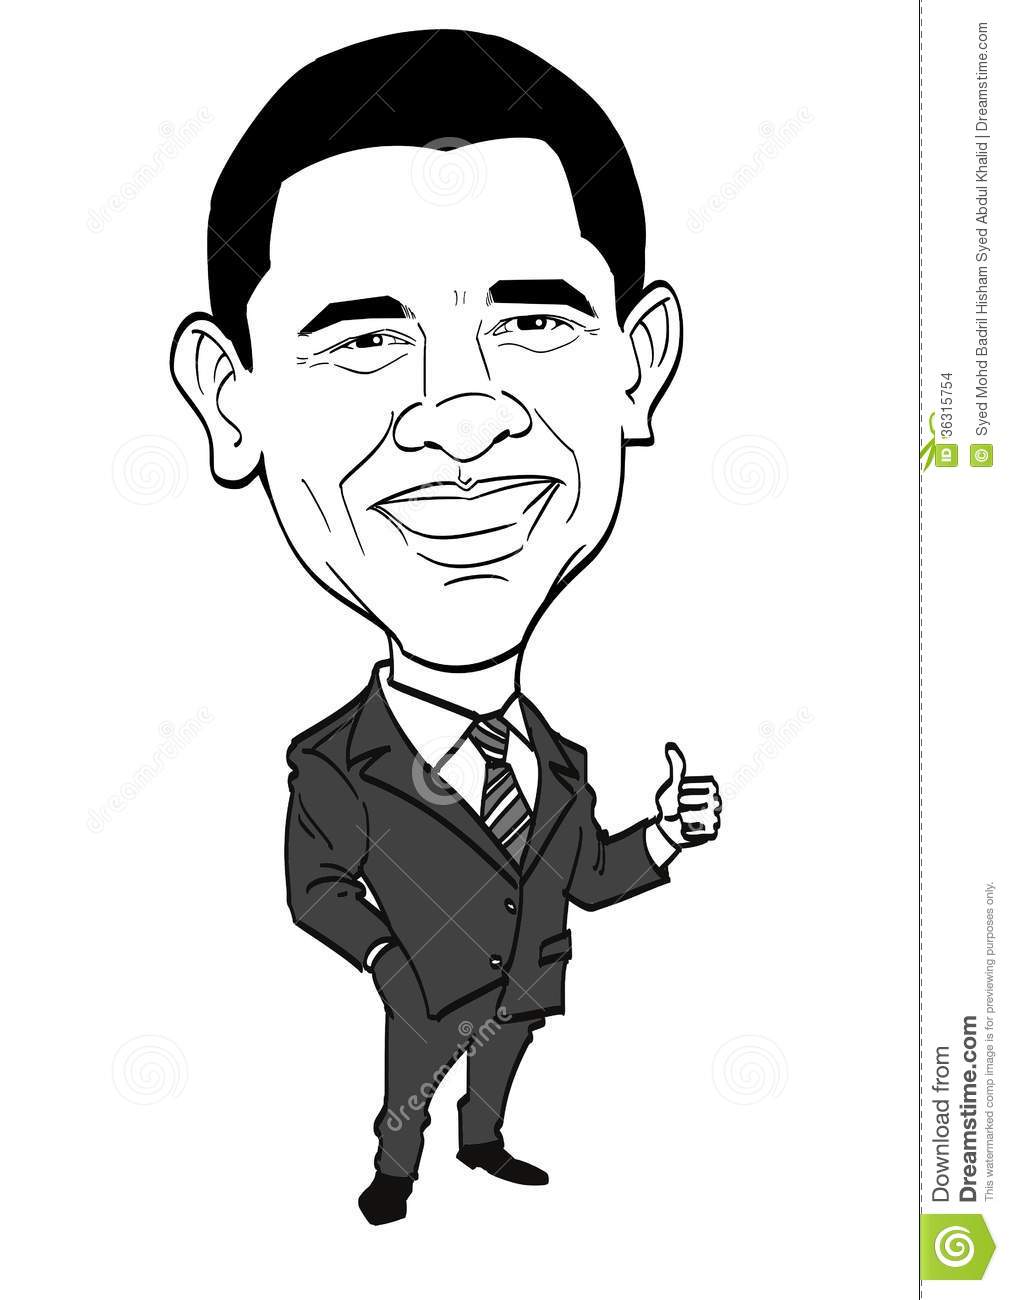     Drawn Caricature Of President United State Of America Barack Obama